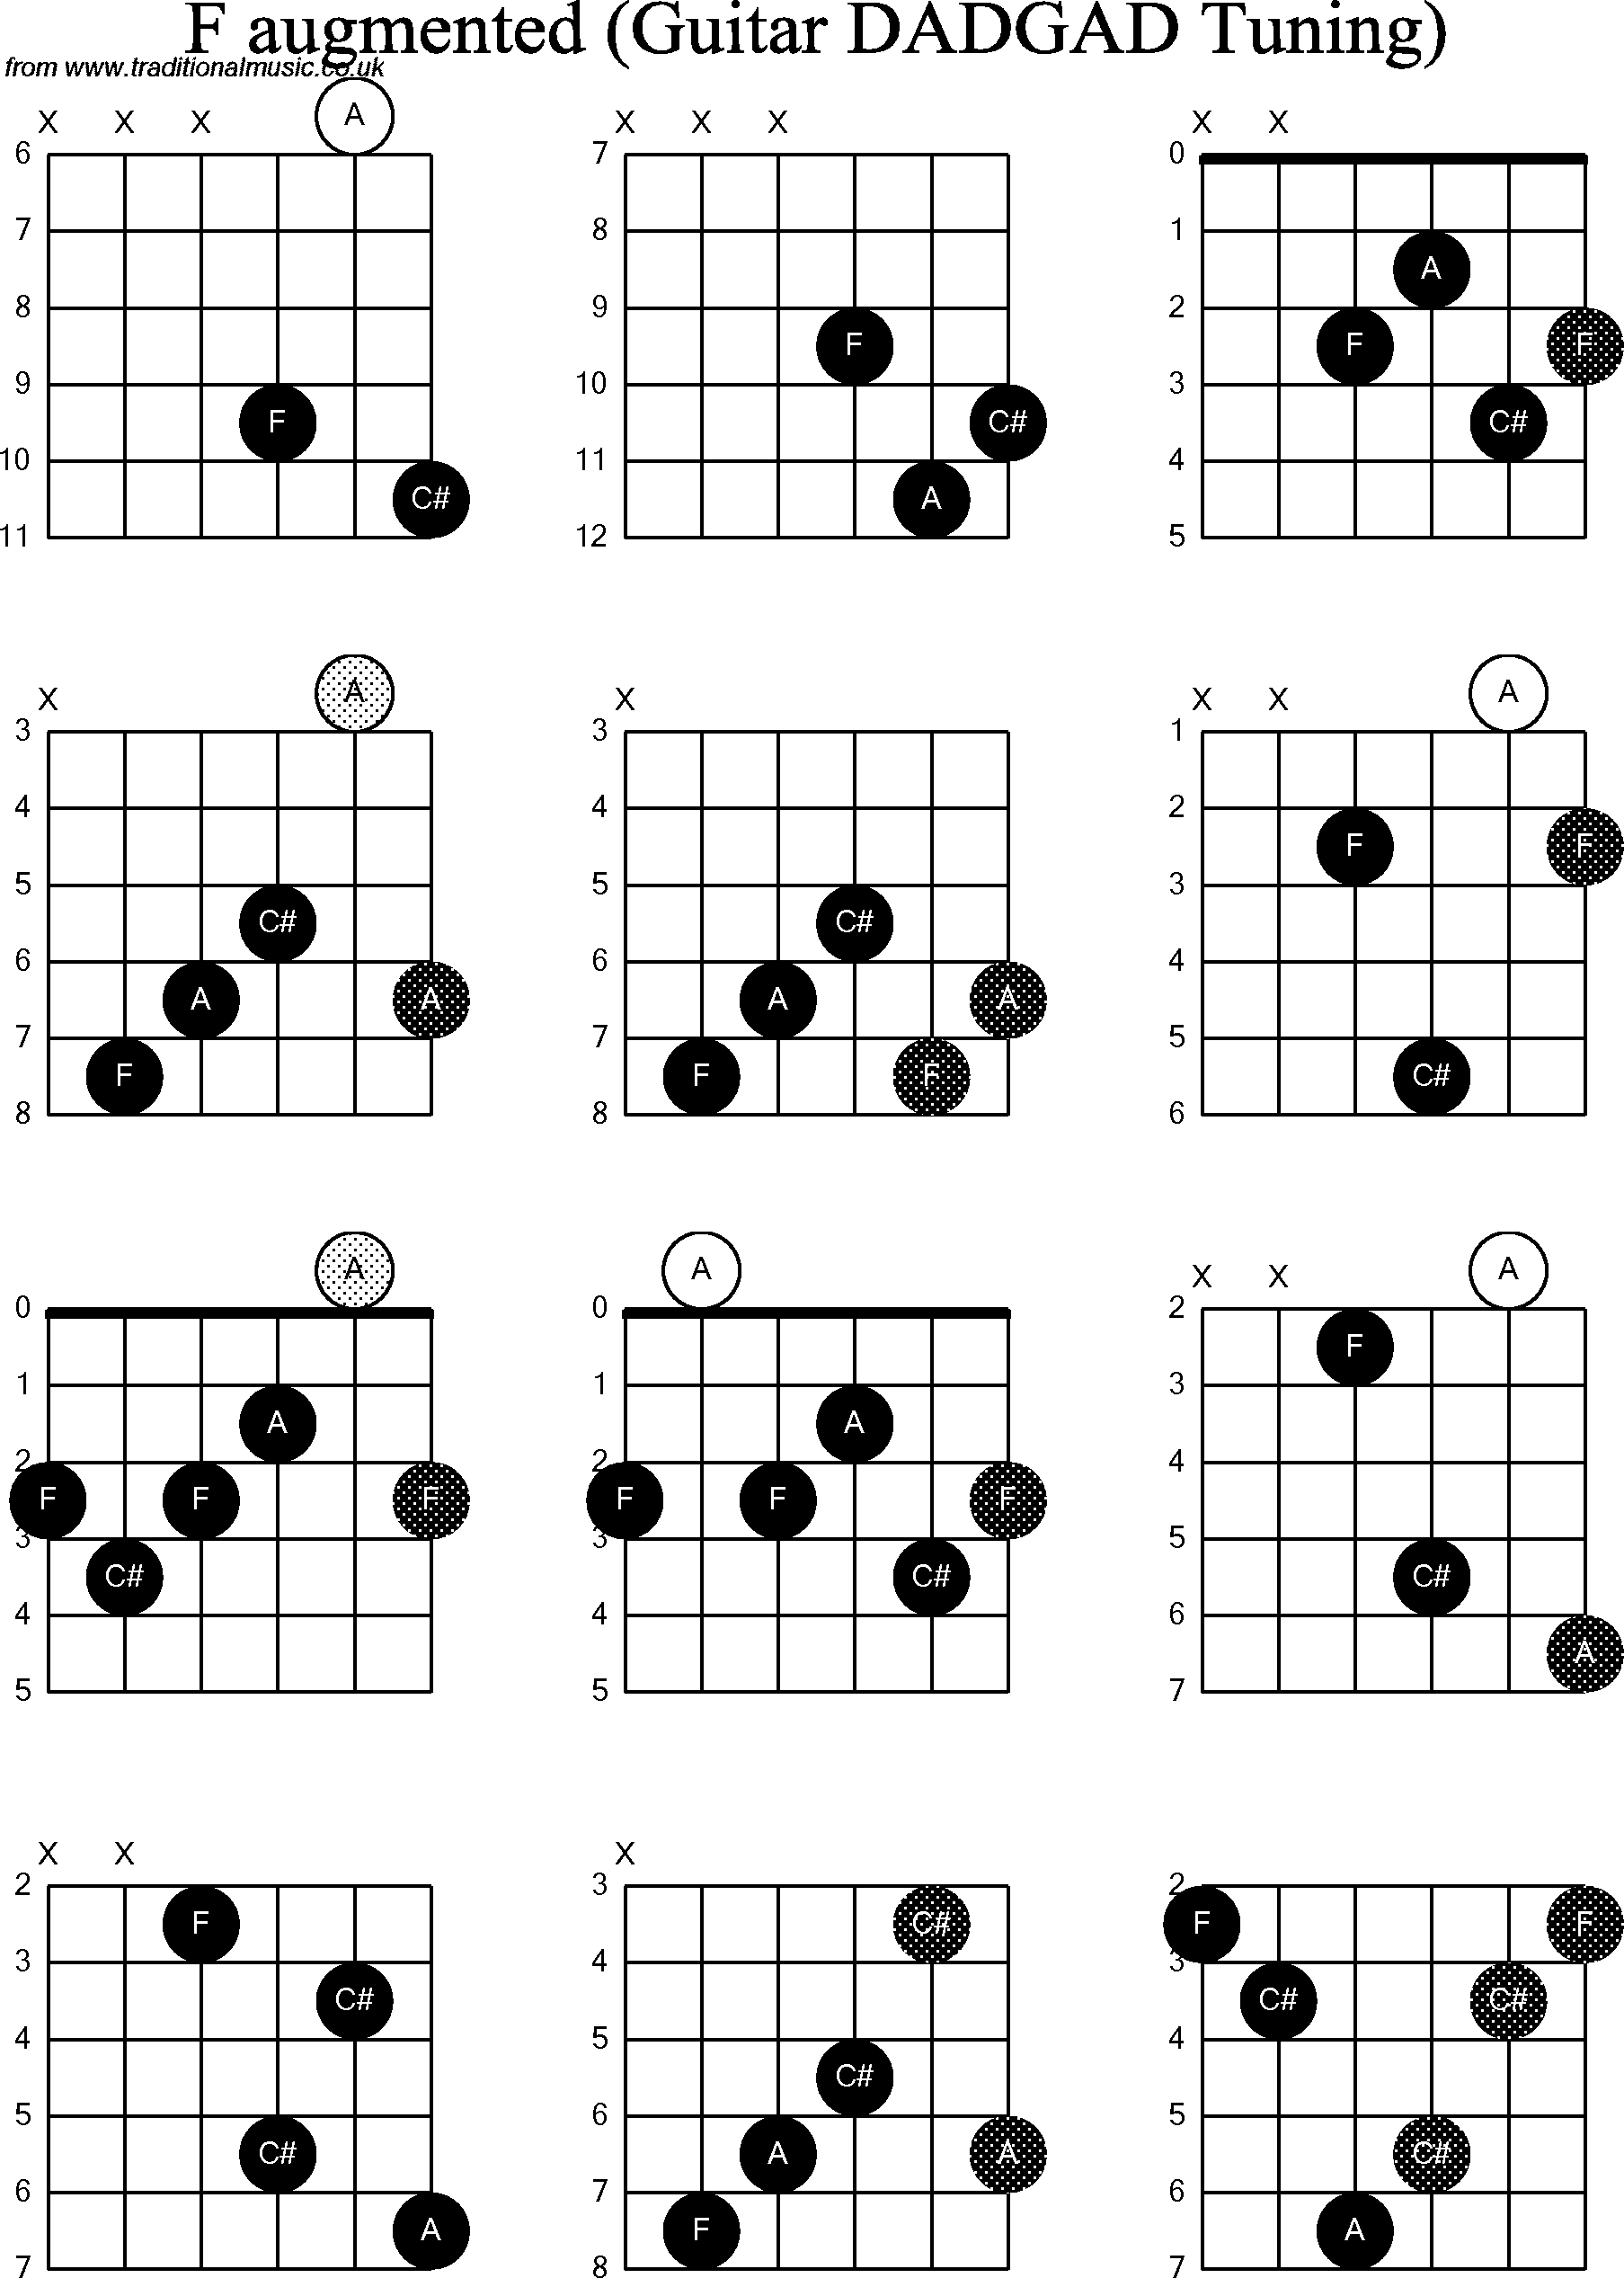 Chord Diagrams for D Modal Guitar(DADGAD), F Augmented